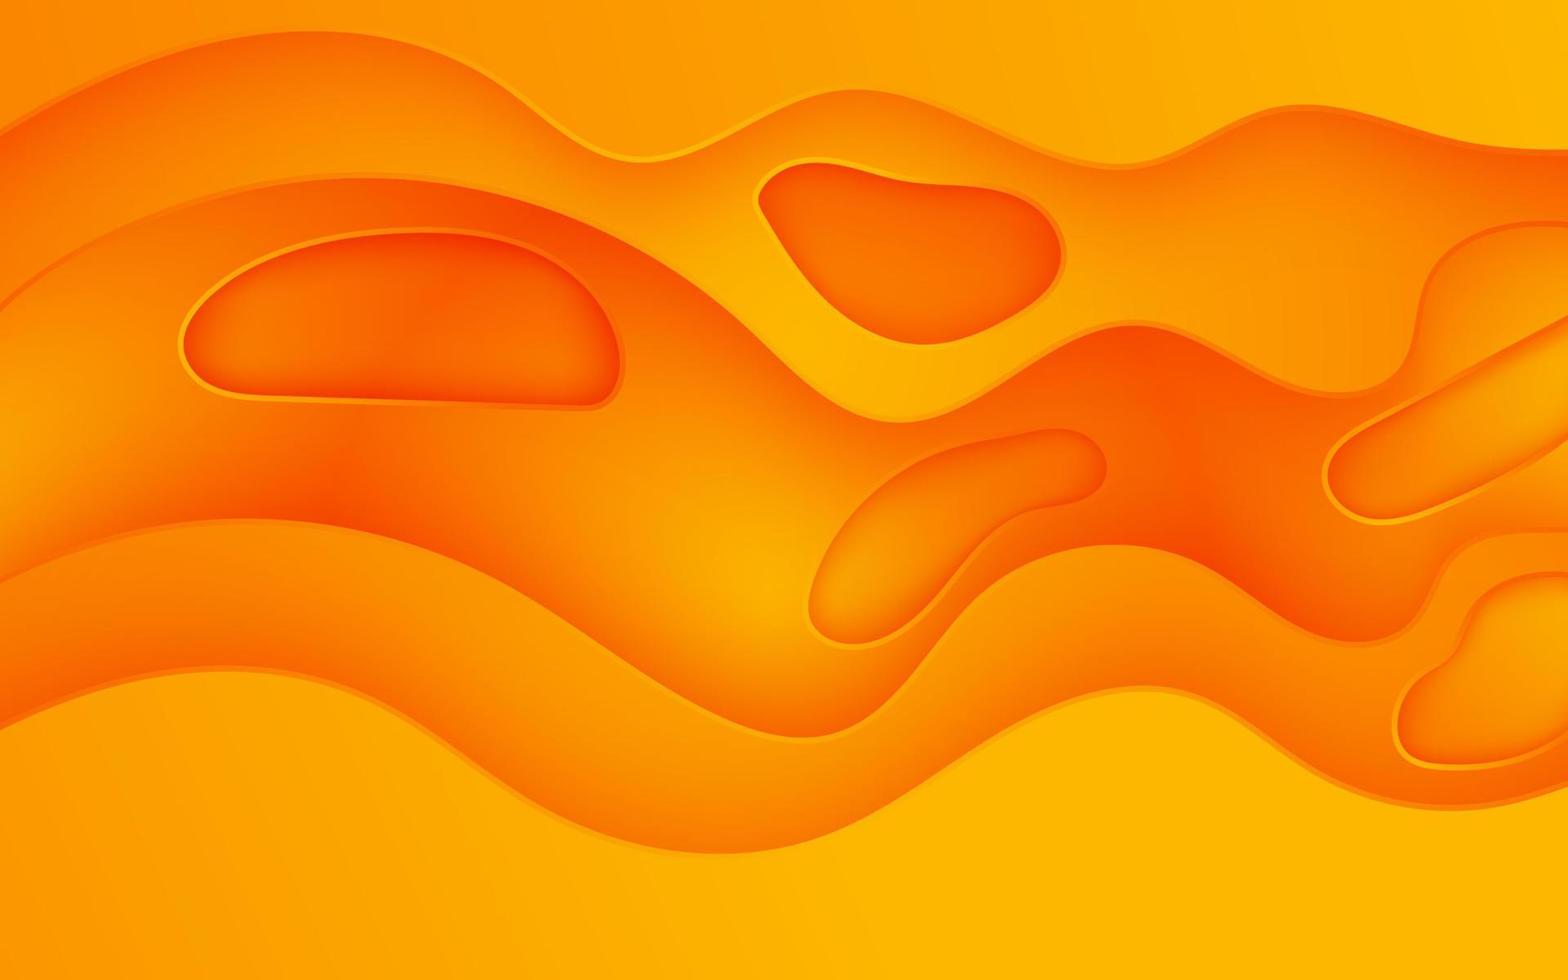 multi colorido abstrato laranja amarelo gradiente colorido ondulado papercut sobreposição de camadas de fundo. vetor eps10